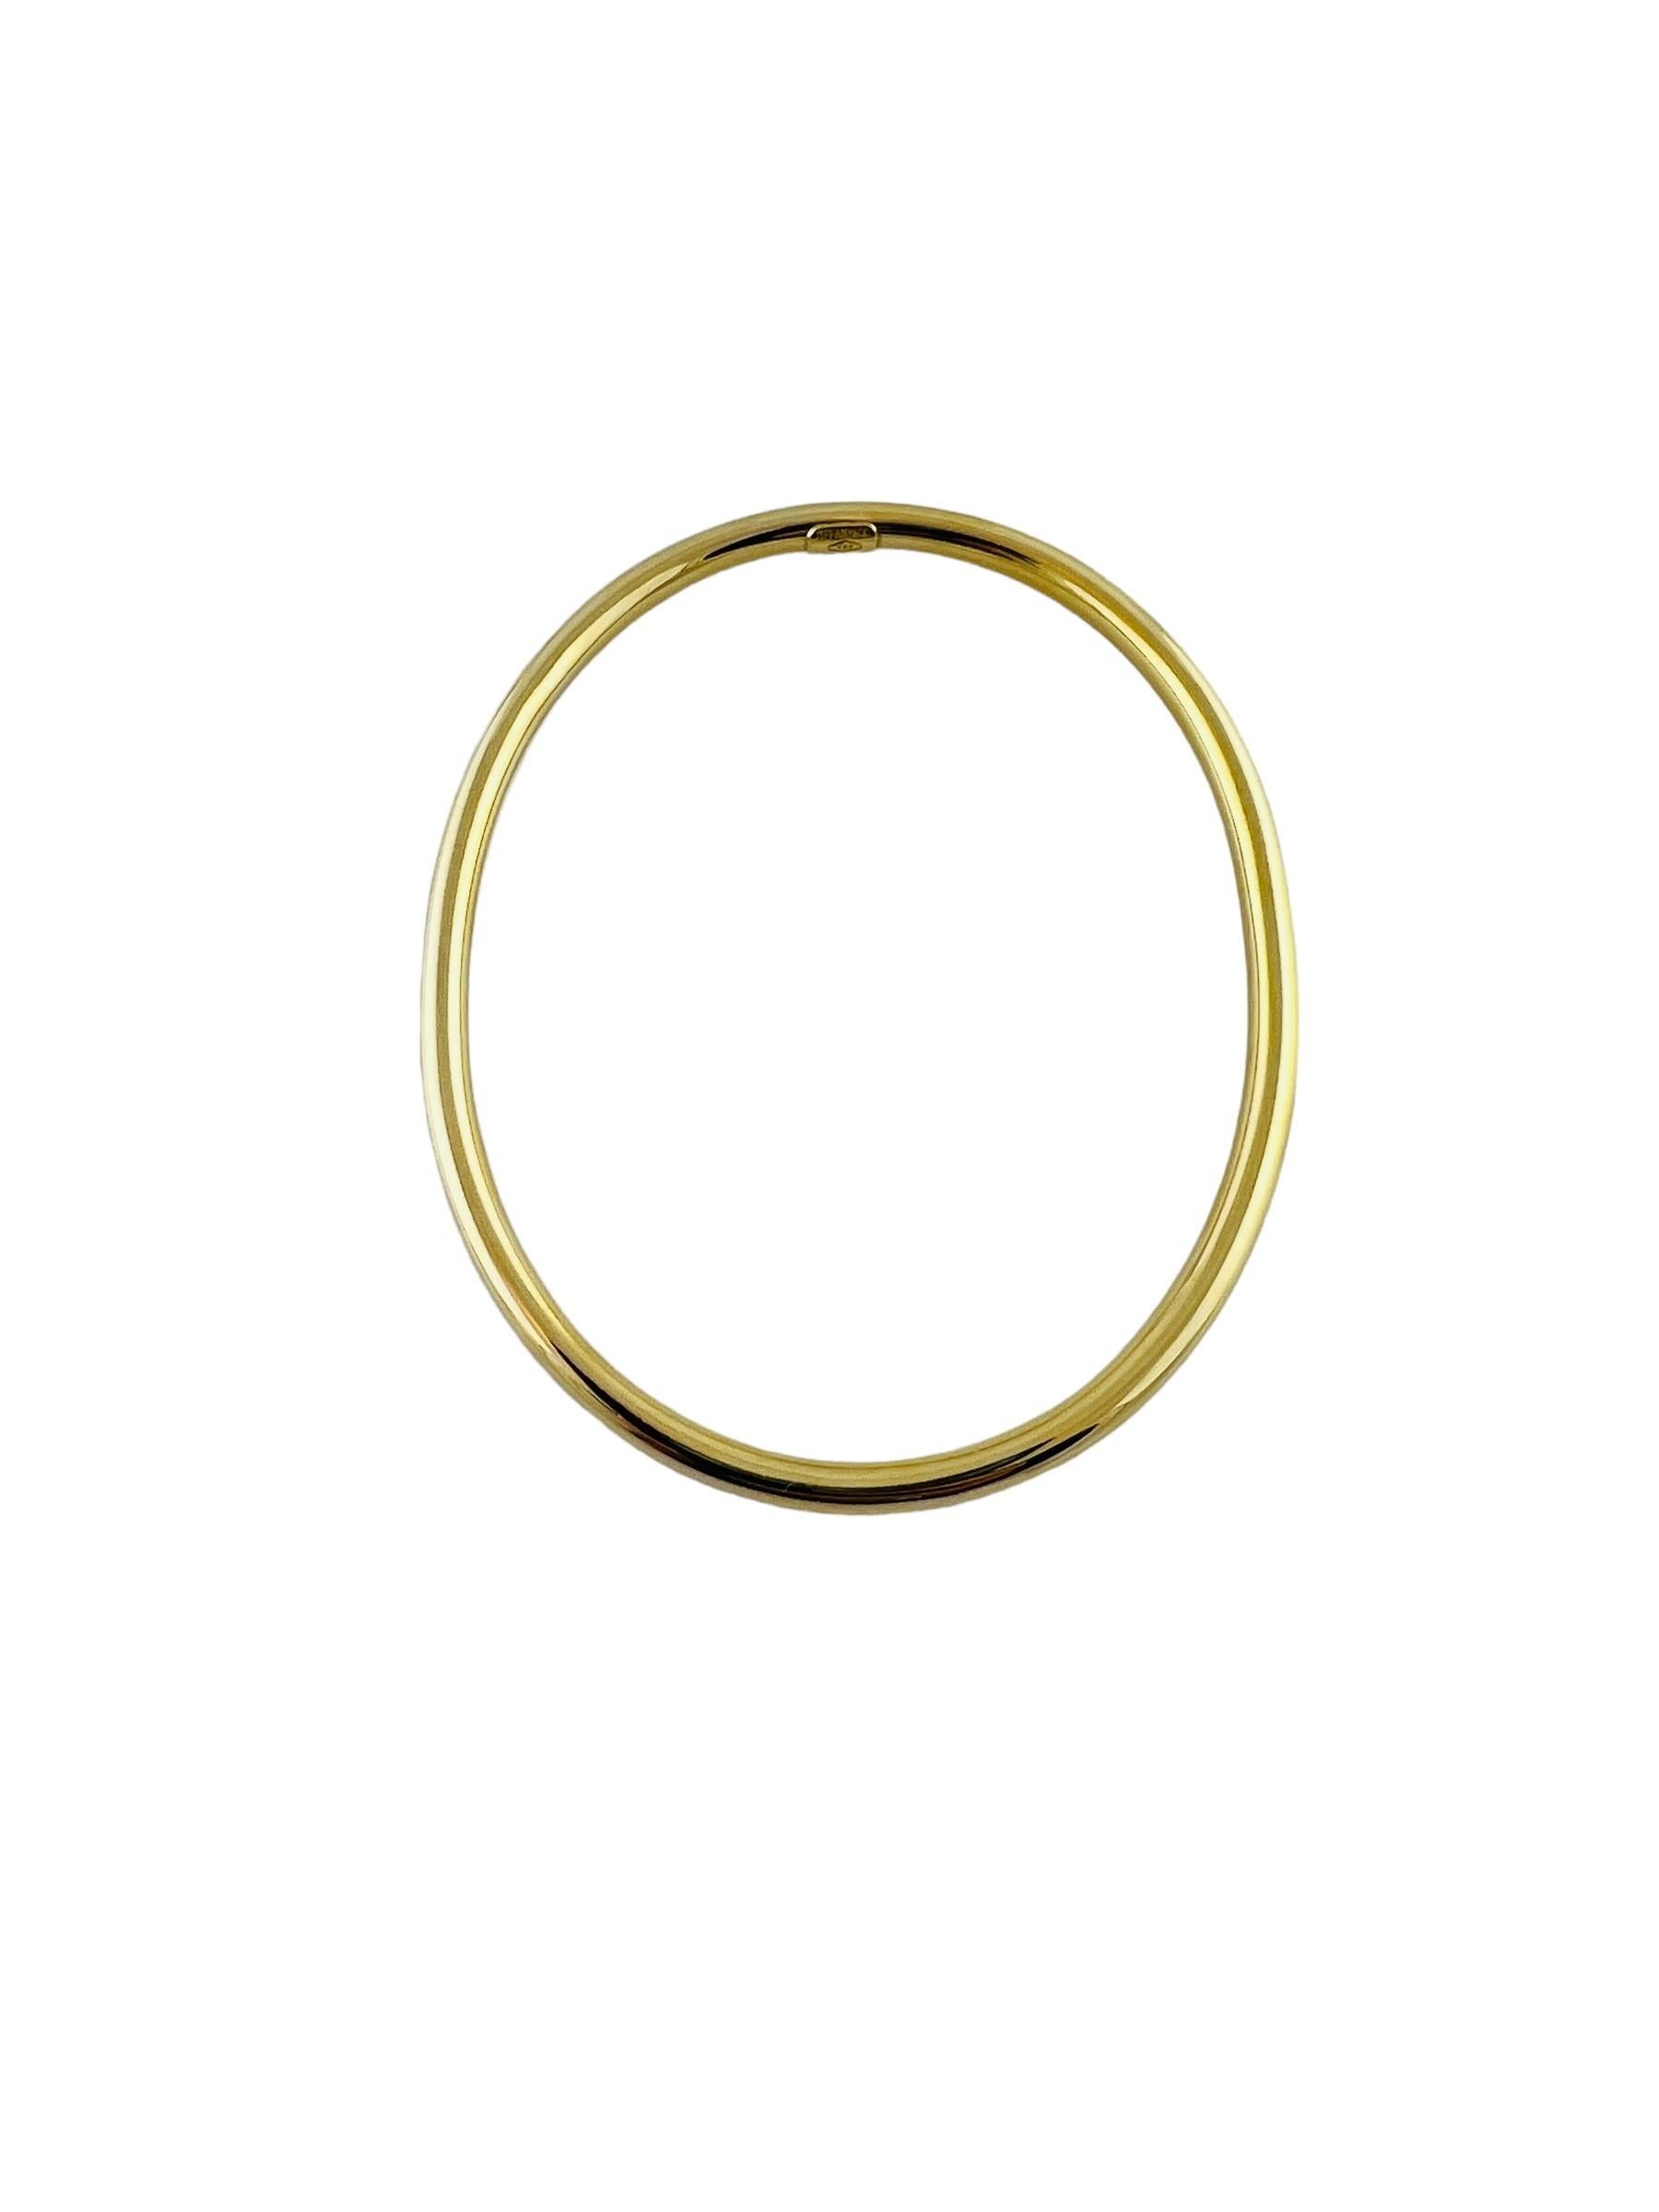 Tiffany & Co. 18K Yellow Gold Oval Bangle Bracelet #16674 1